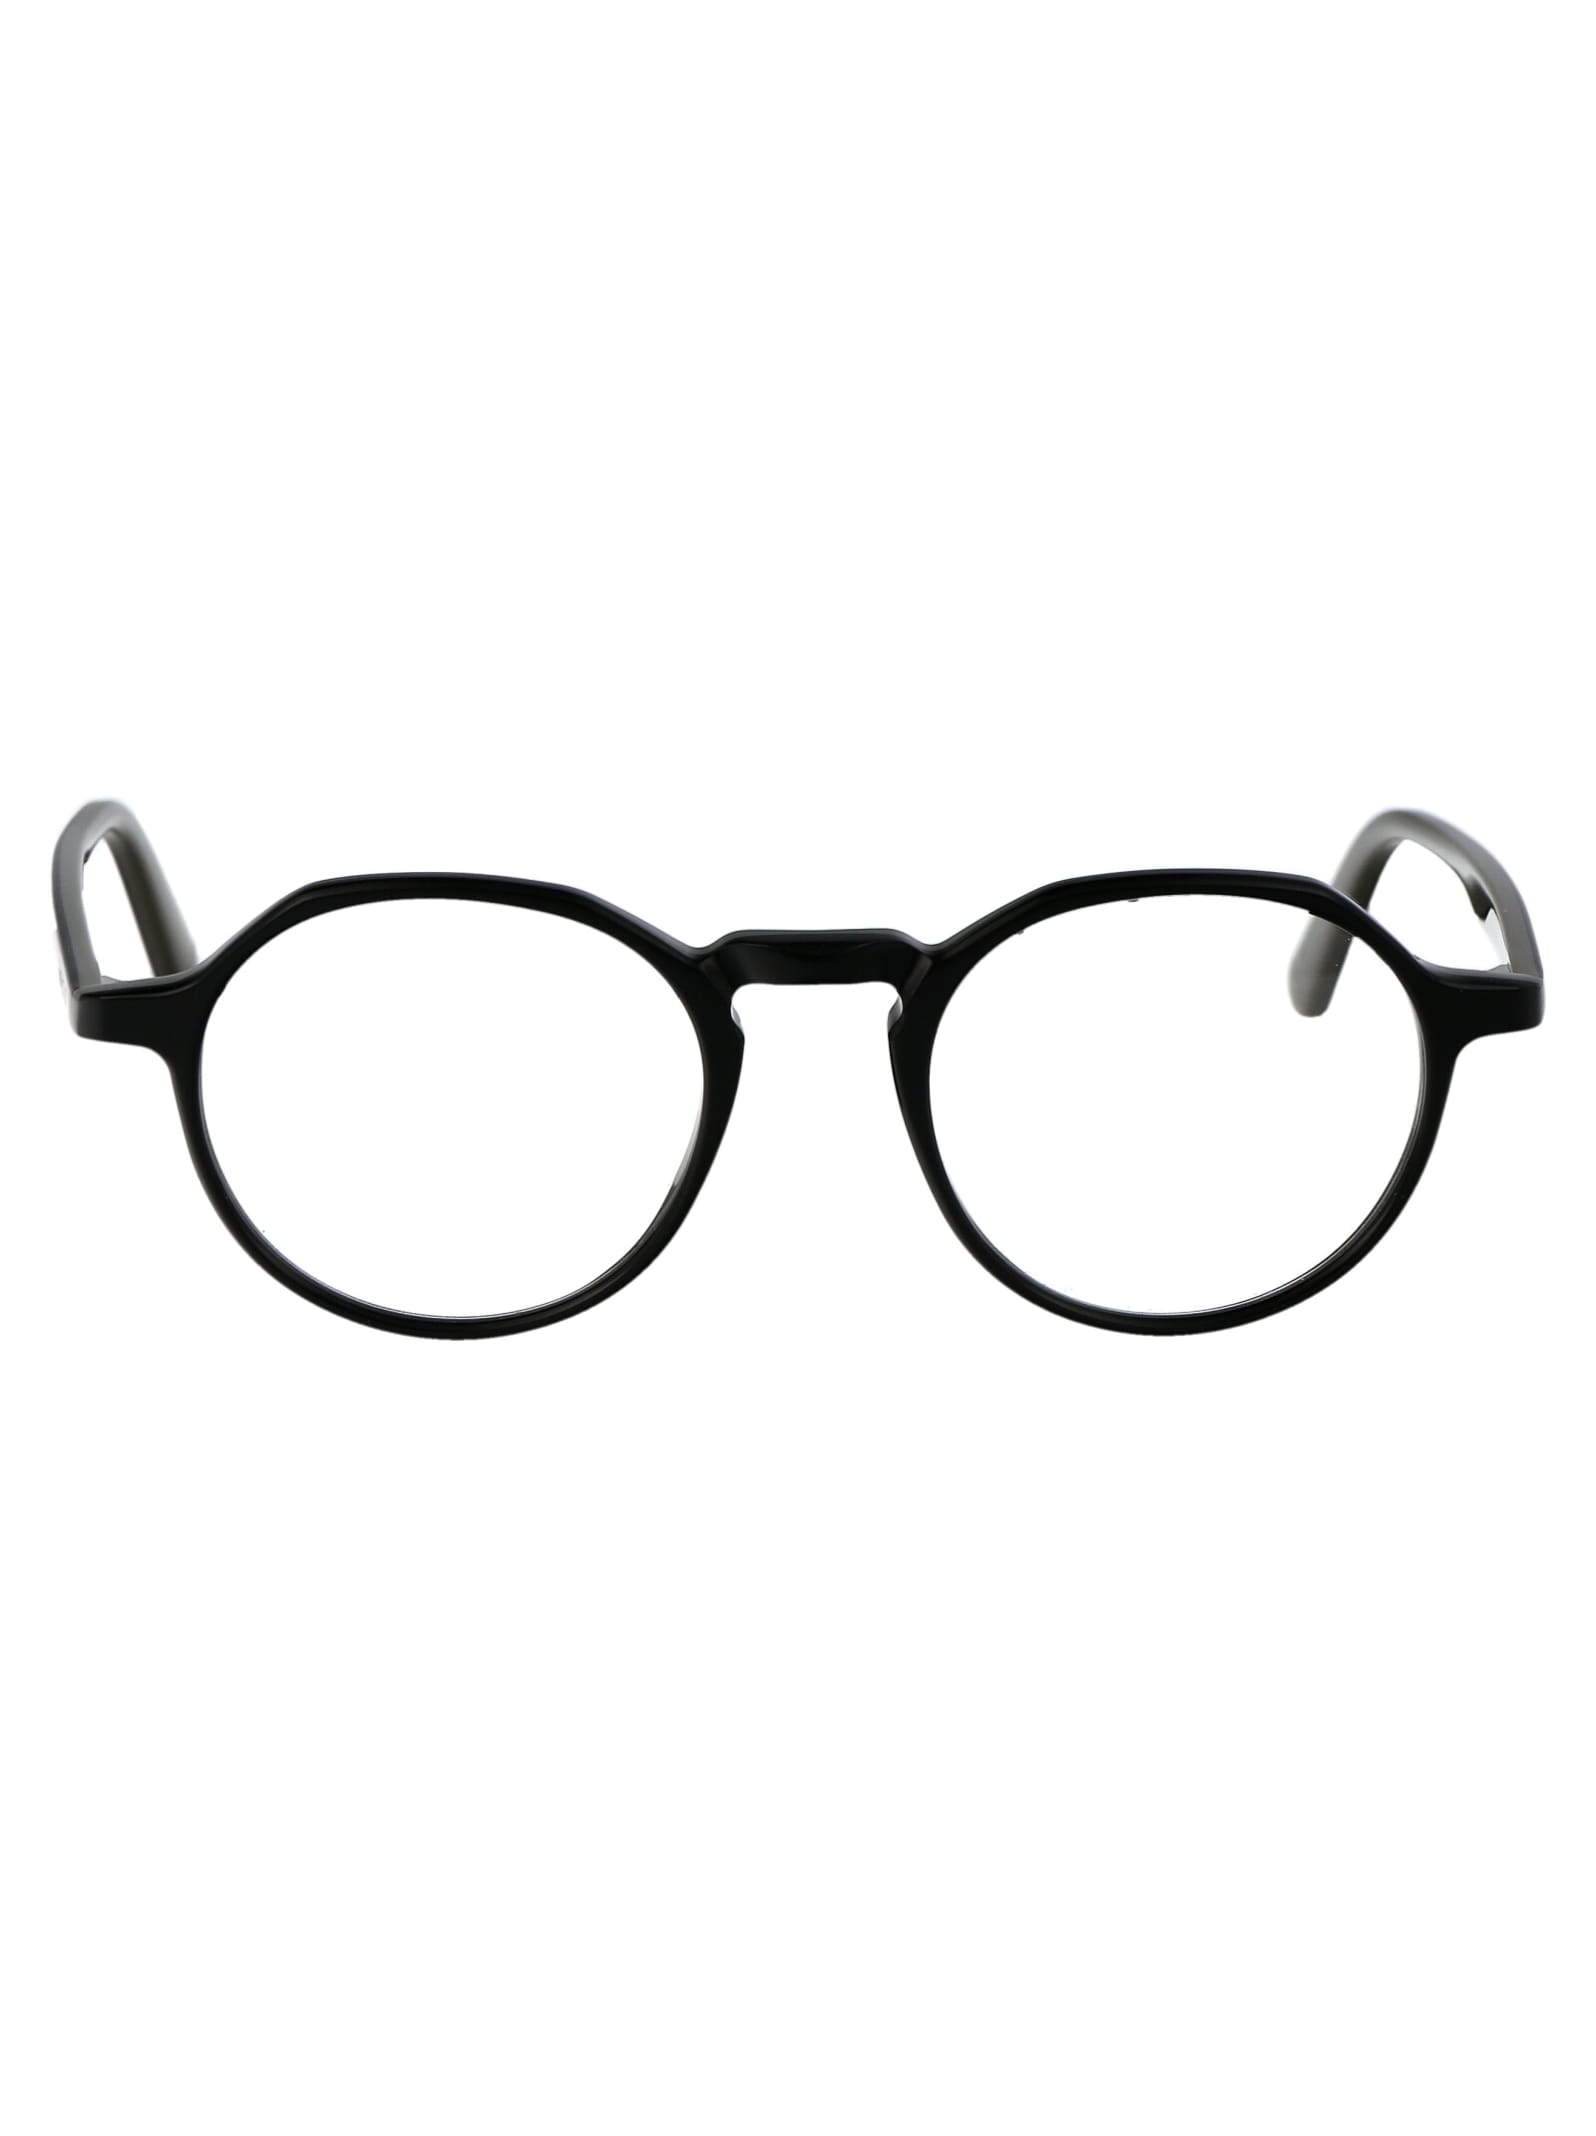 Ml5120 Glasses